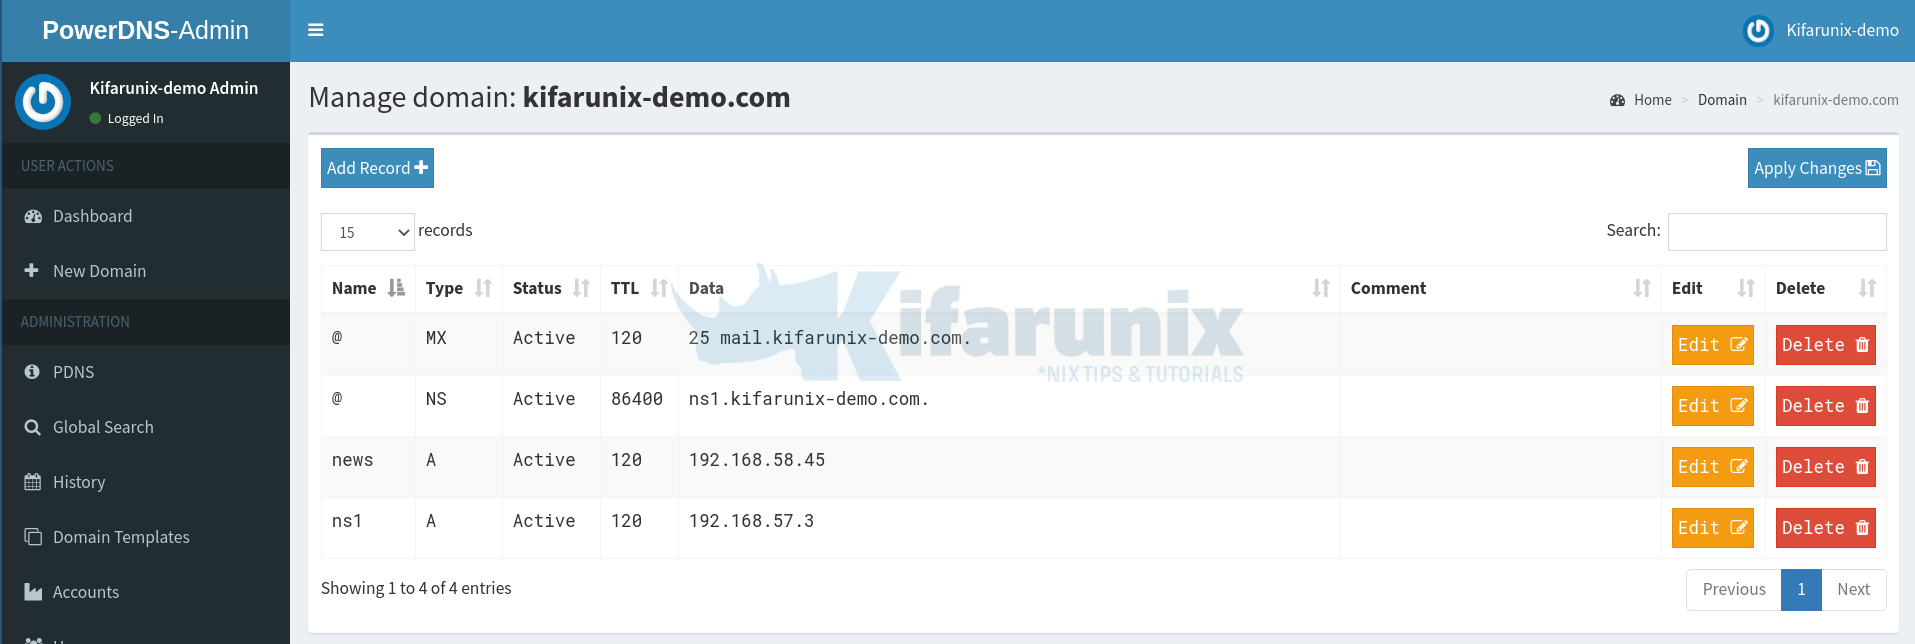 Easily Install and Setup PowerDNS Admin on Ubuntu 20.04